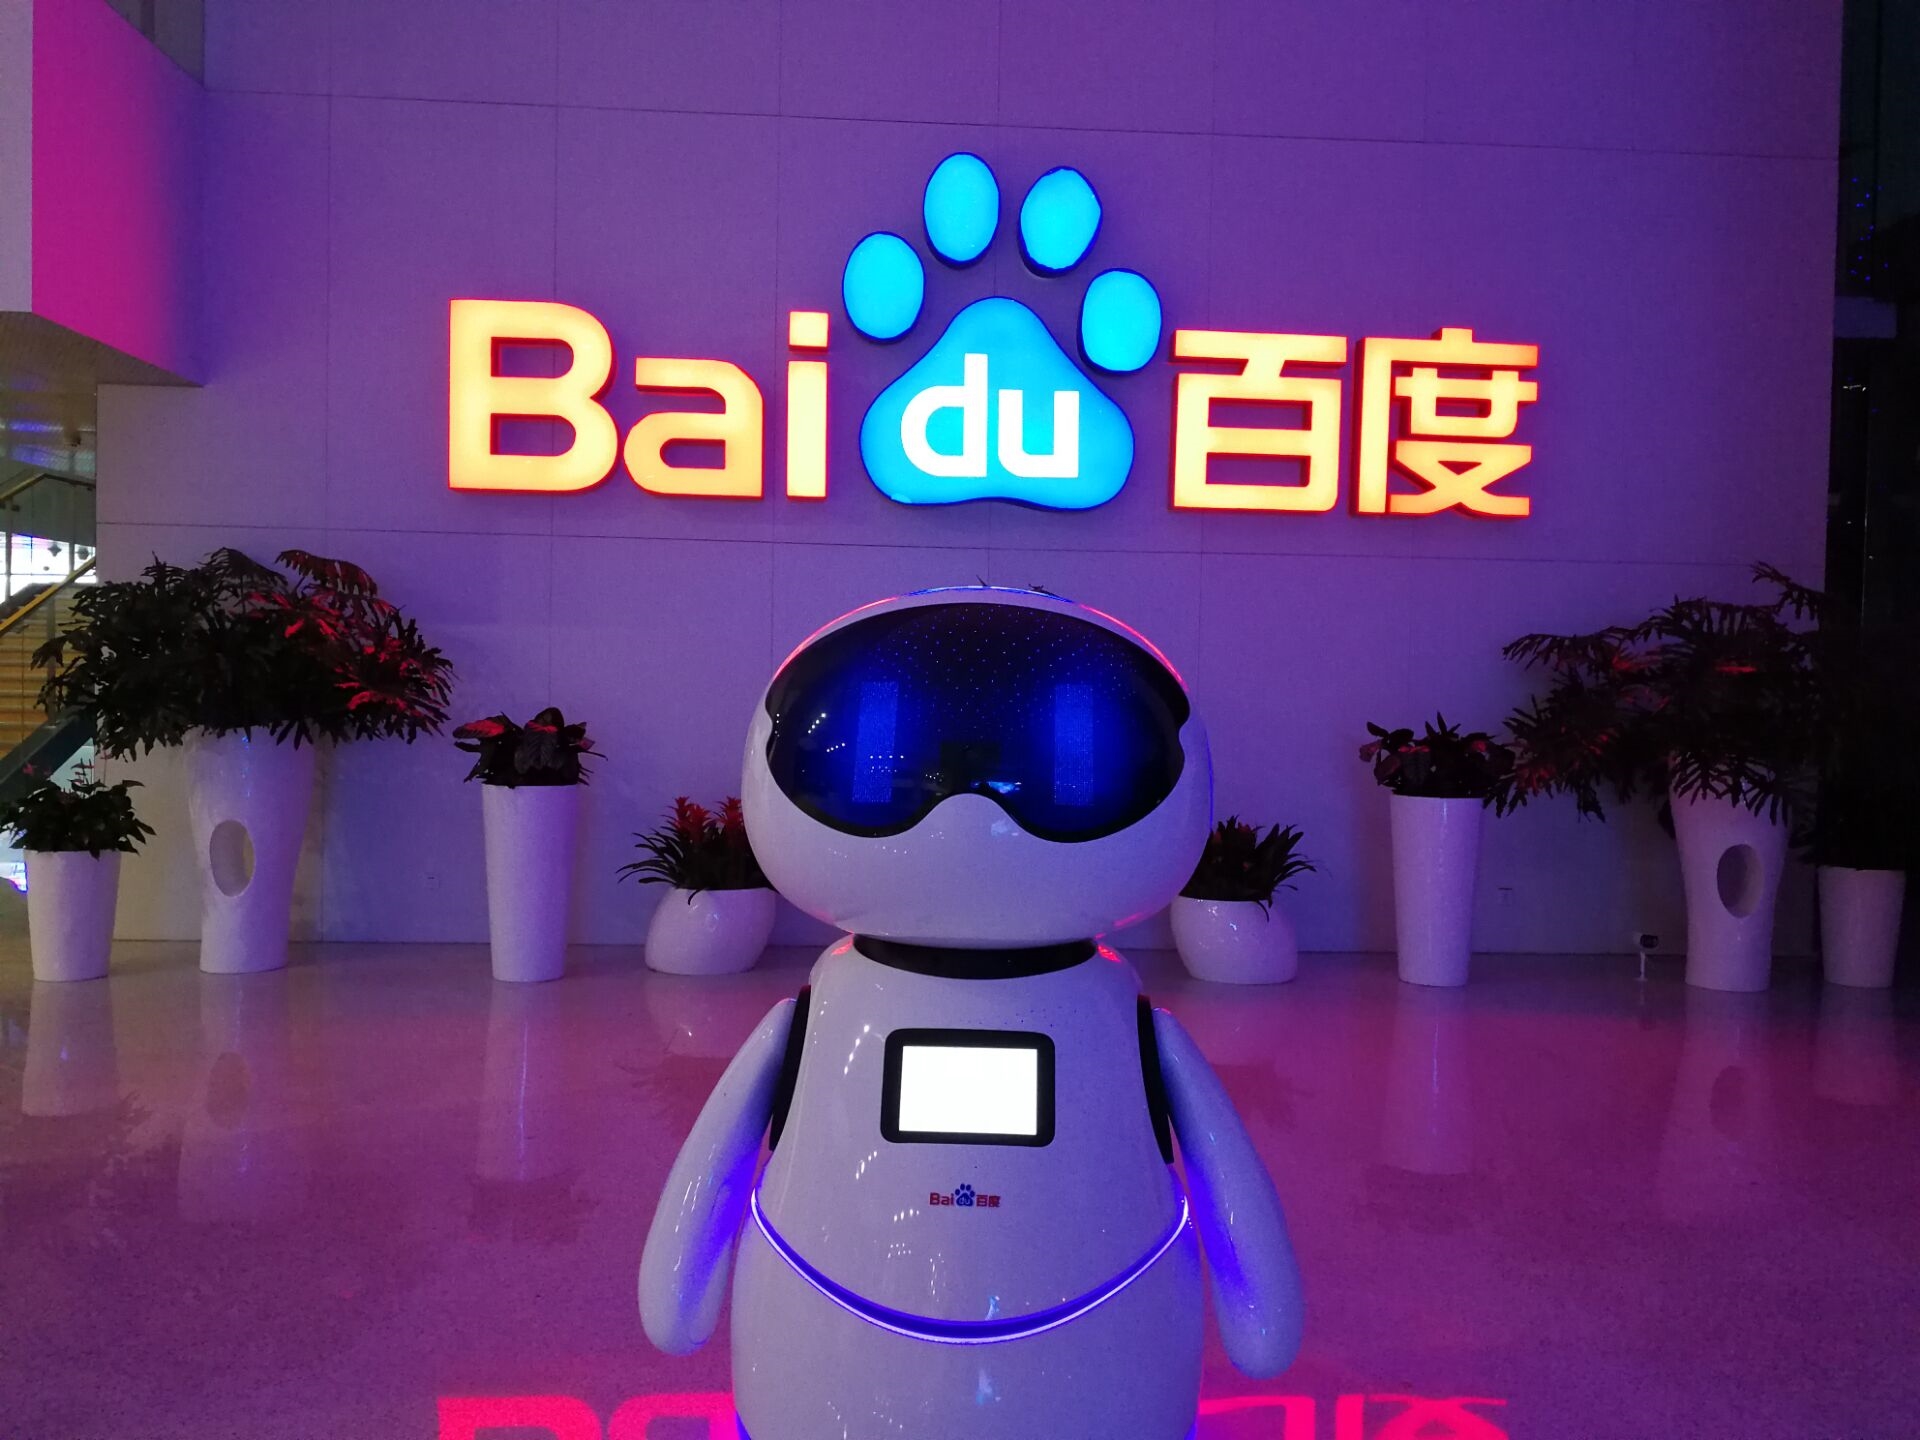 Baidu venture capital fund